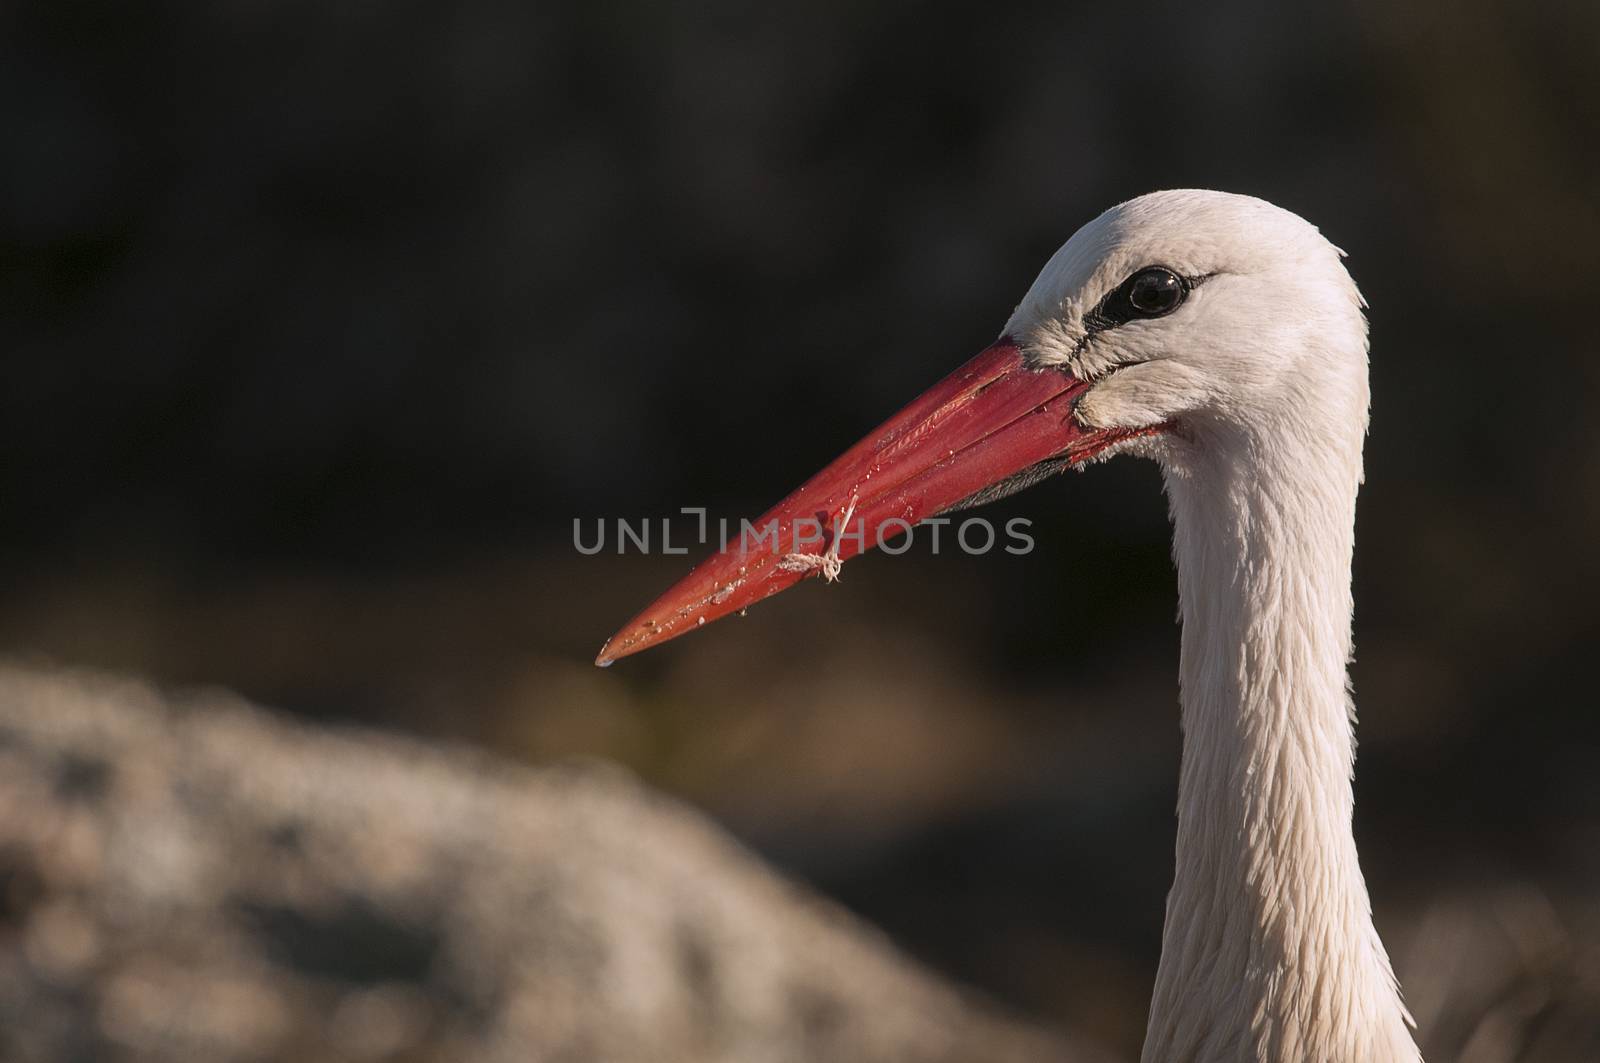 White stork portrait (Ciconia ciconia) by jalonsohu@gmail.com